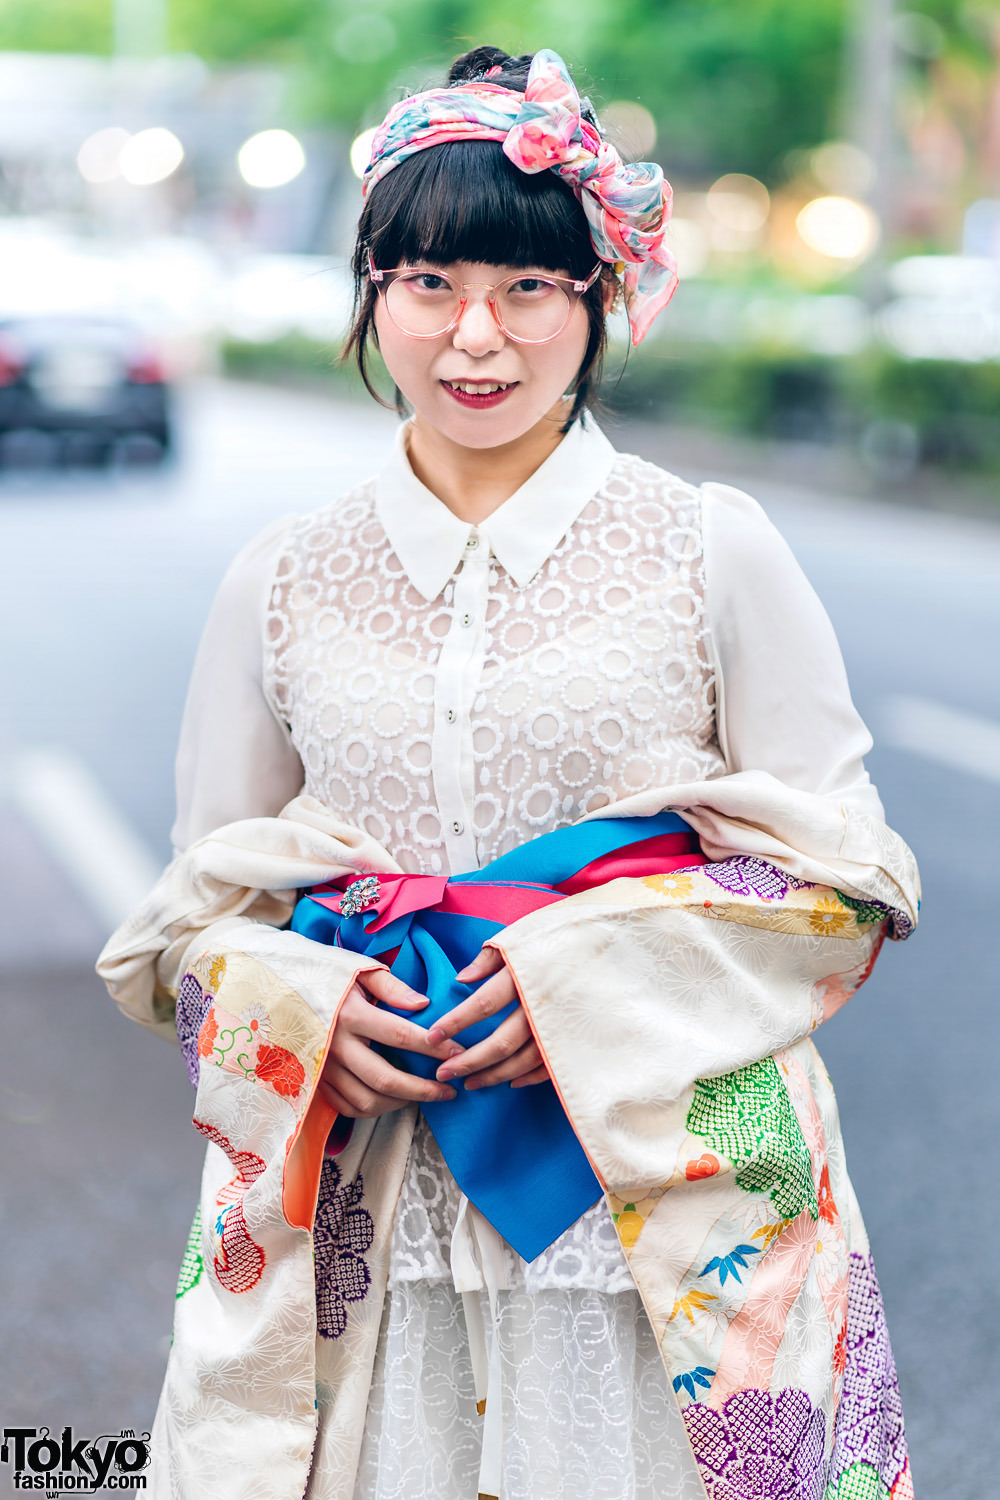 tokyo-fashion:  Japanese fashion student Lisa on the street in Harajuku wearing a